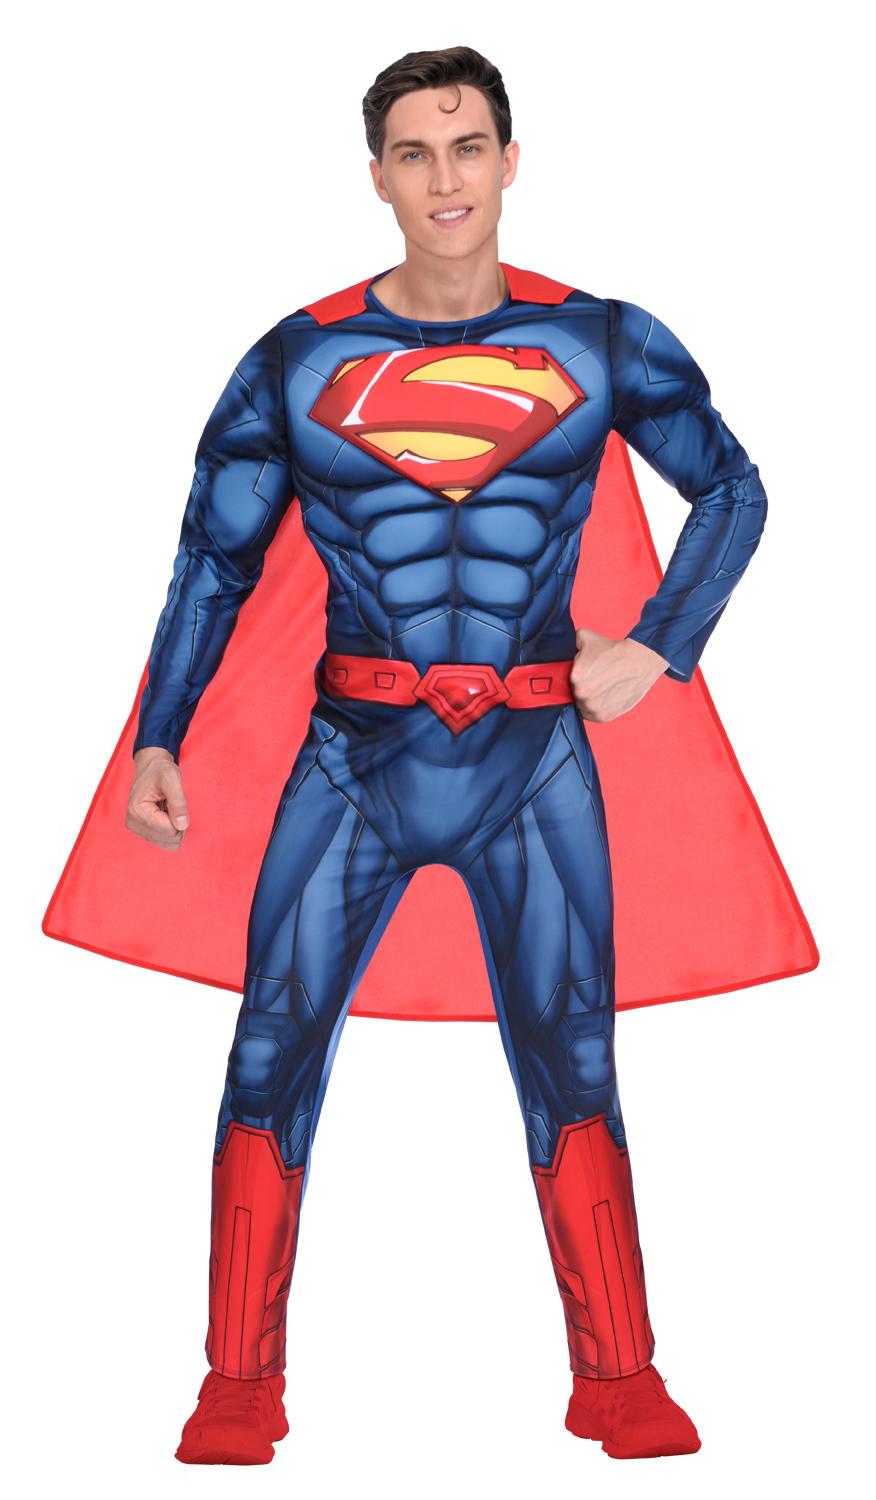 Classic Superman Costume